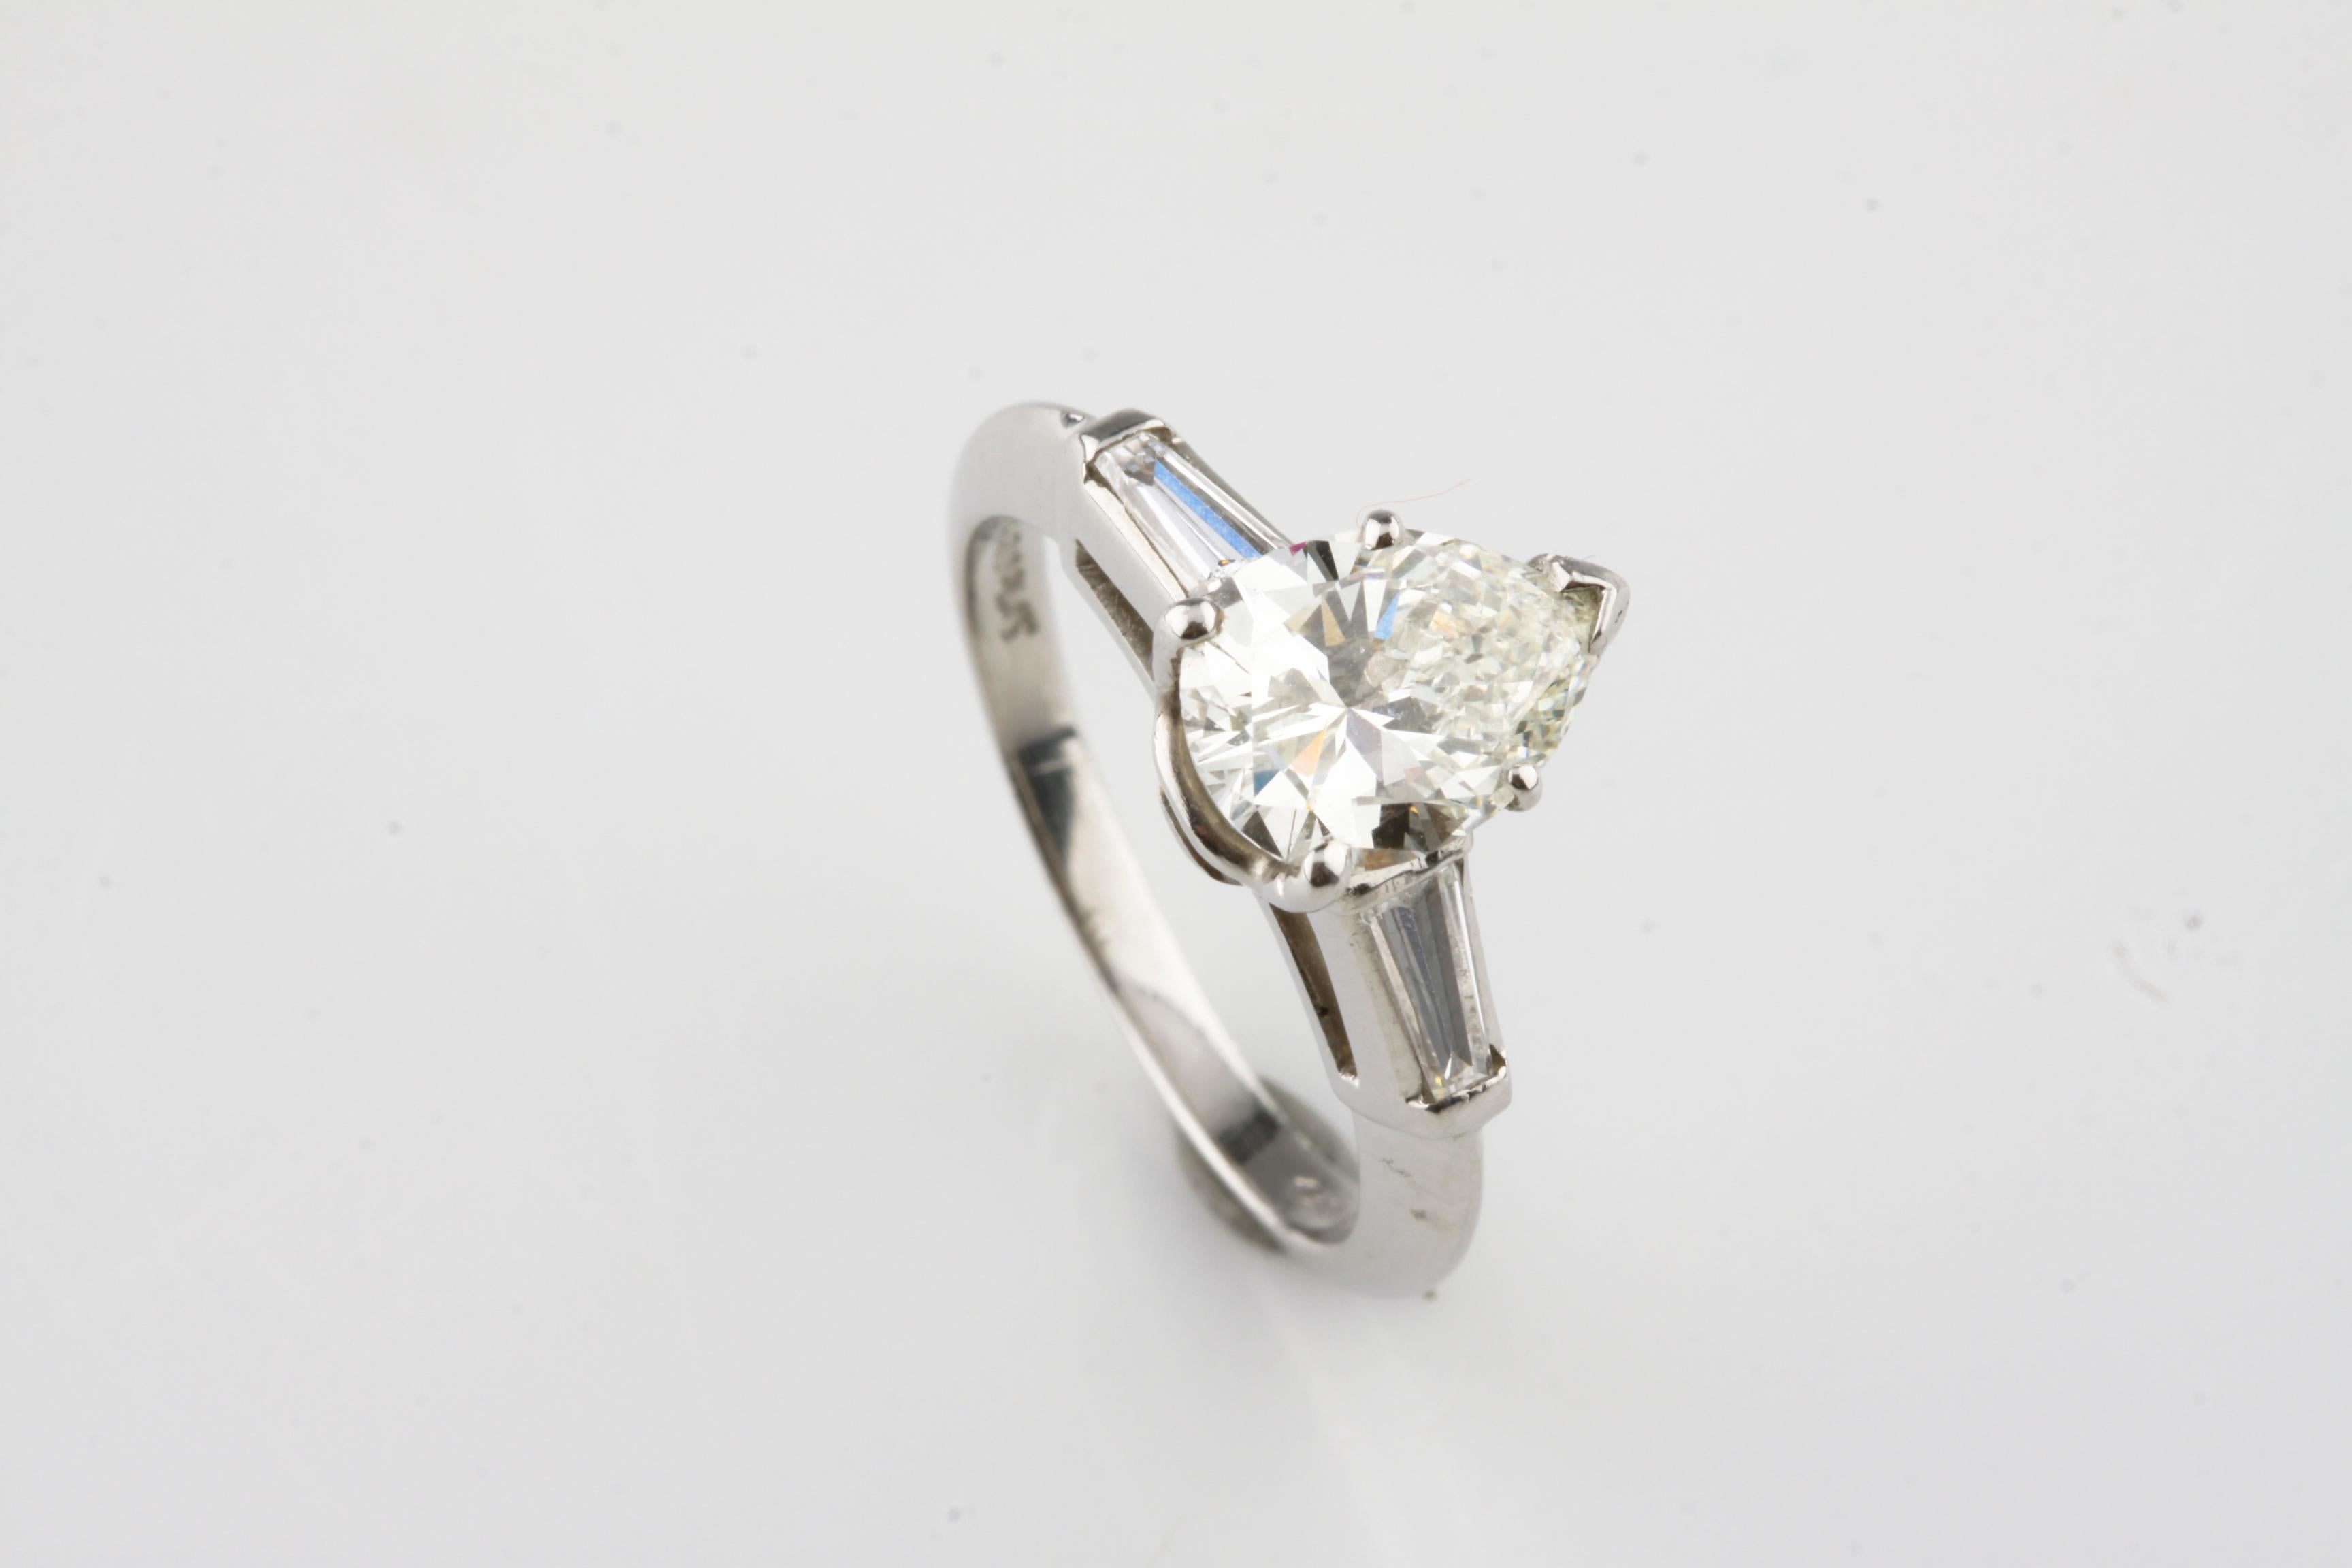 One electronically tested Platinum ladies cast diamond unity ring. 
Size 5.5
Bright Polish finish. 
Identified with marking of 